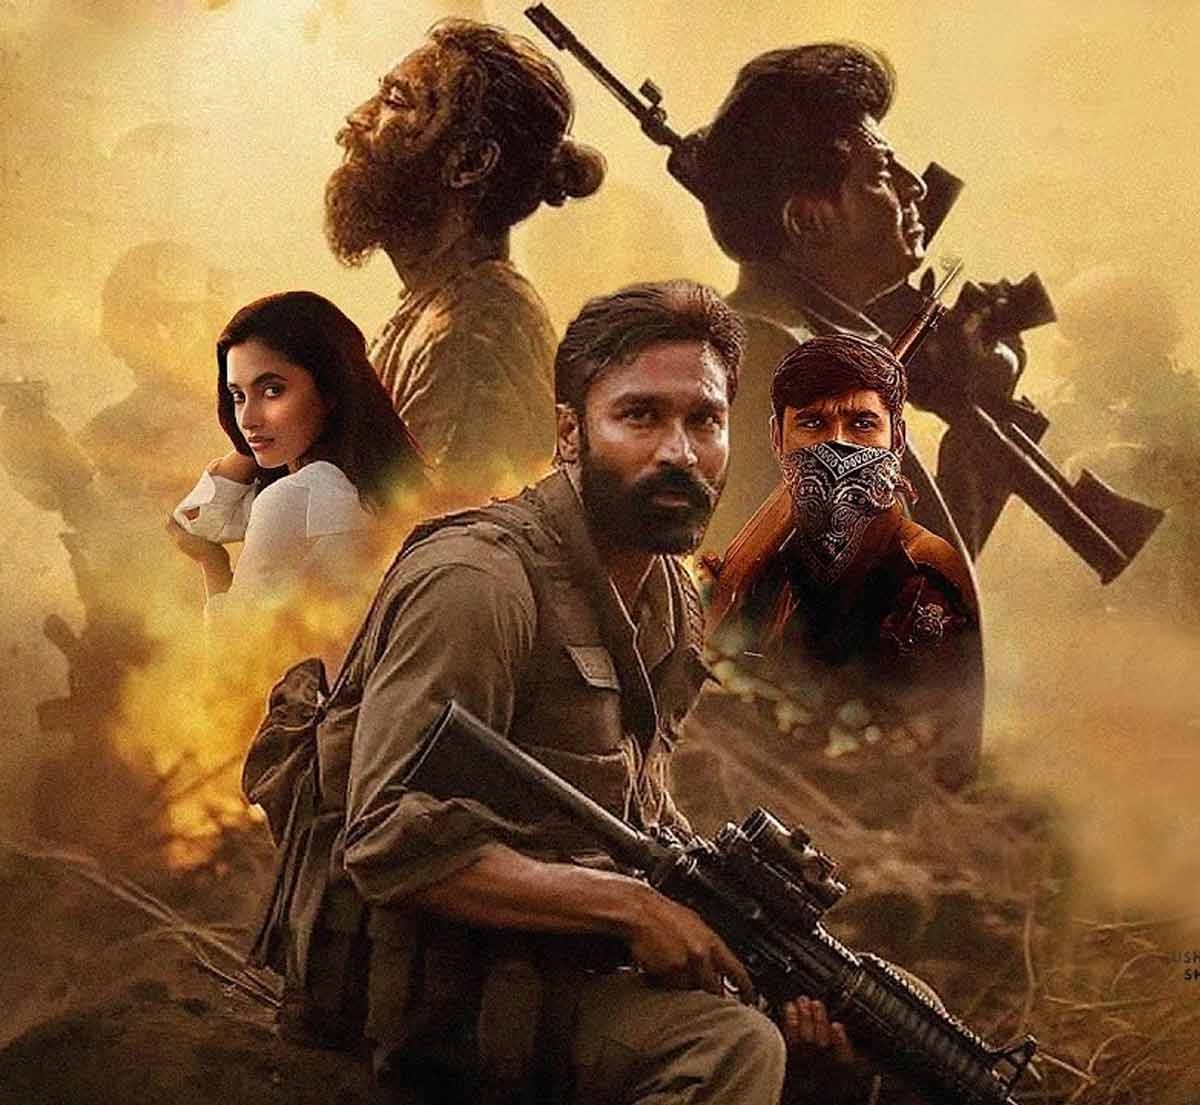 Captain Millers Telugu version release date confirmed